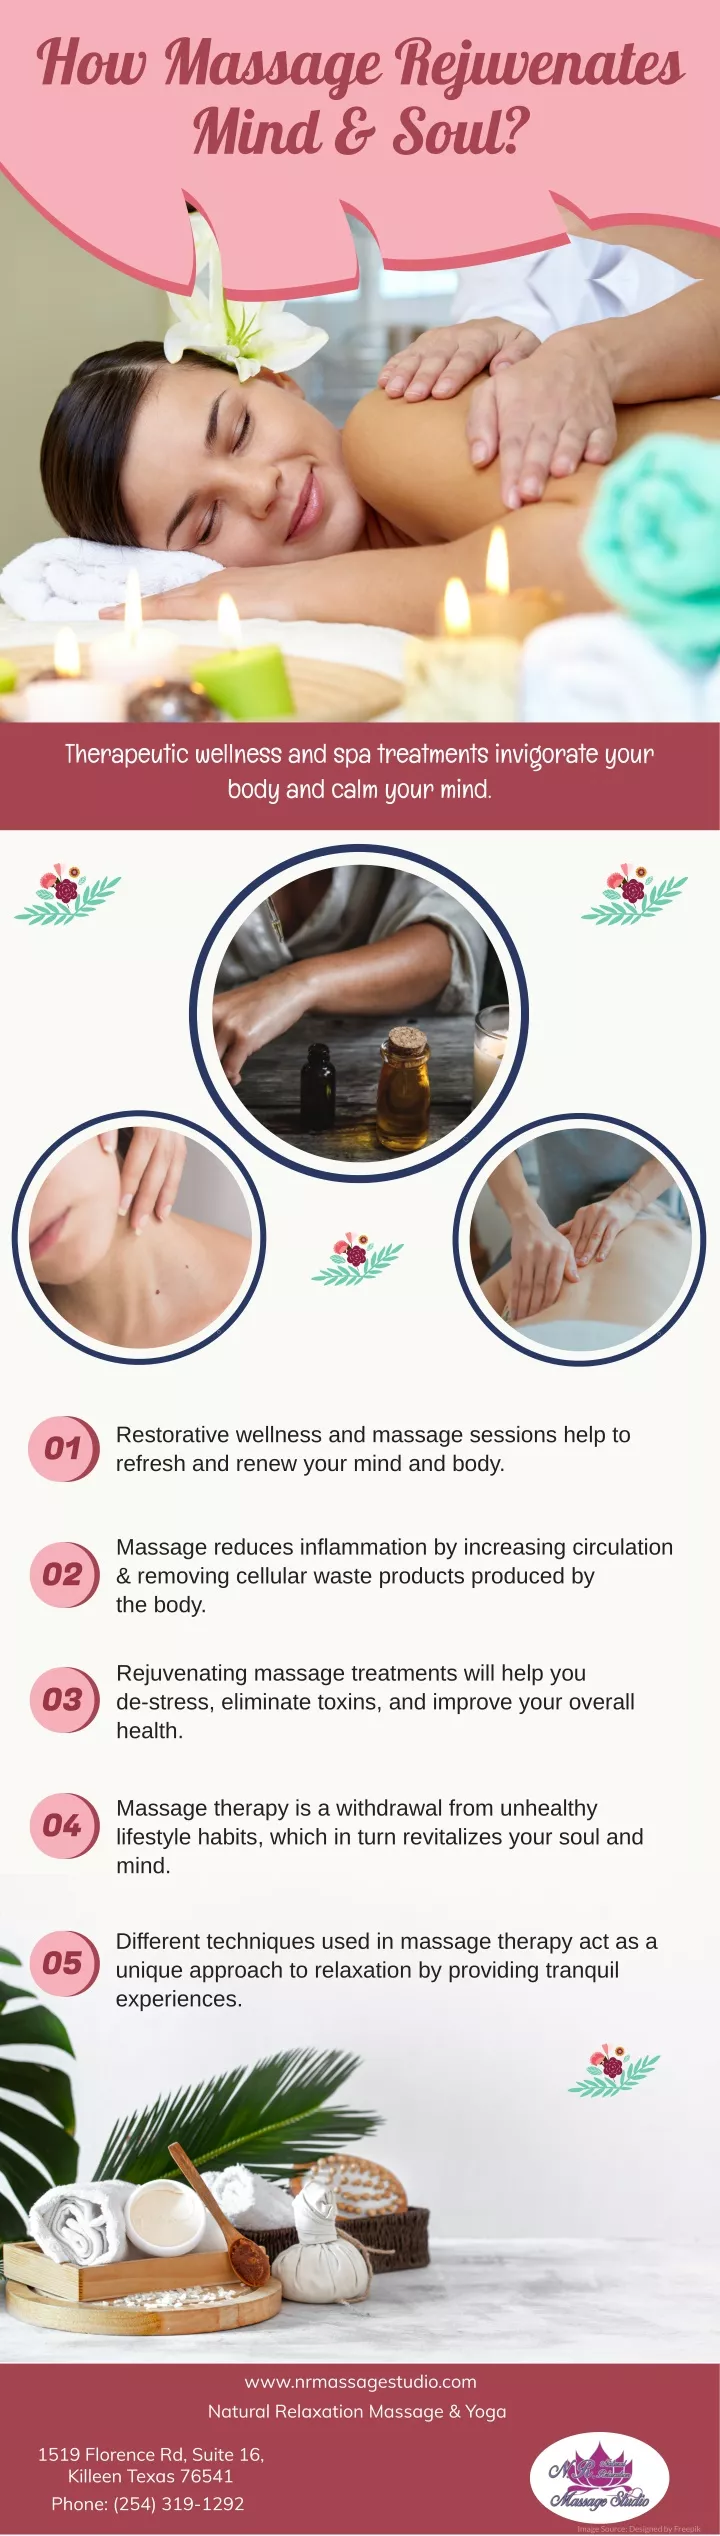 how massage rejuvenates mind soul